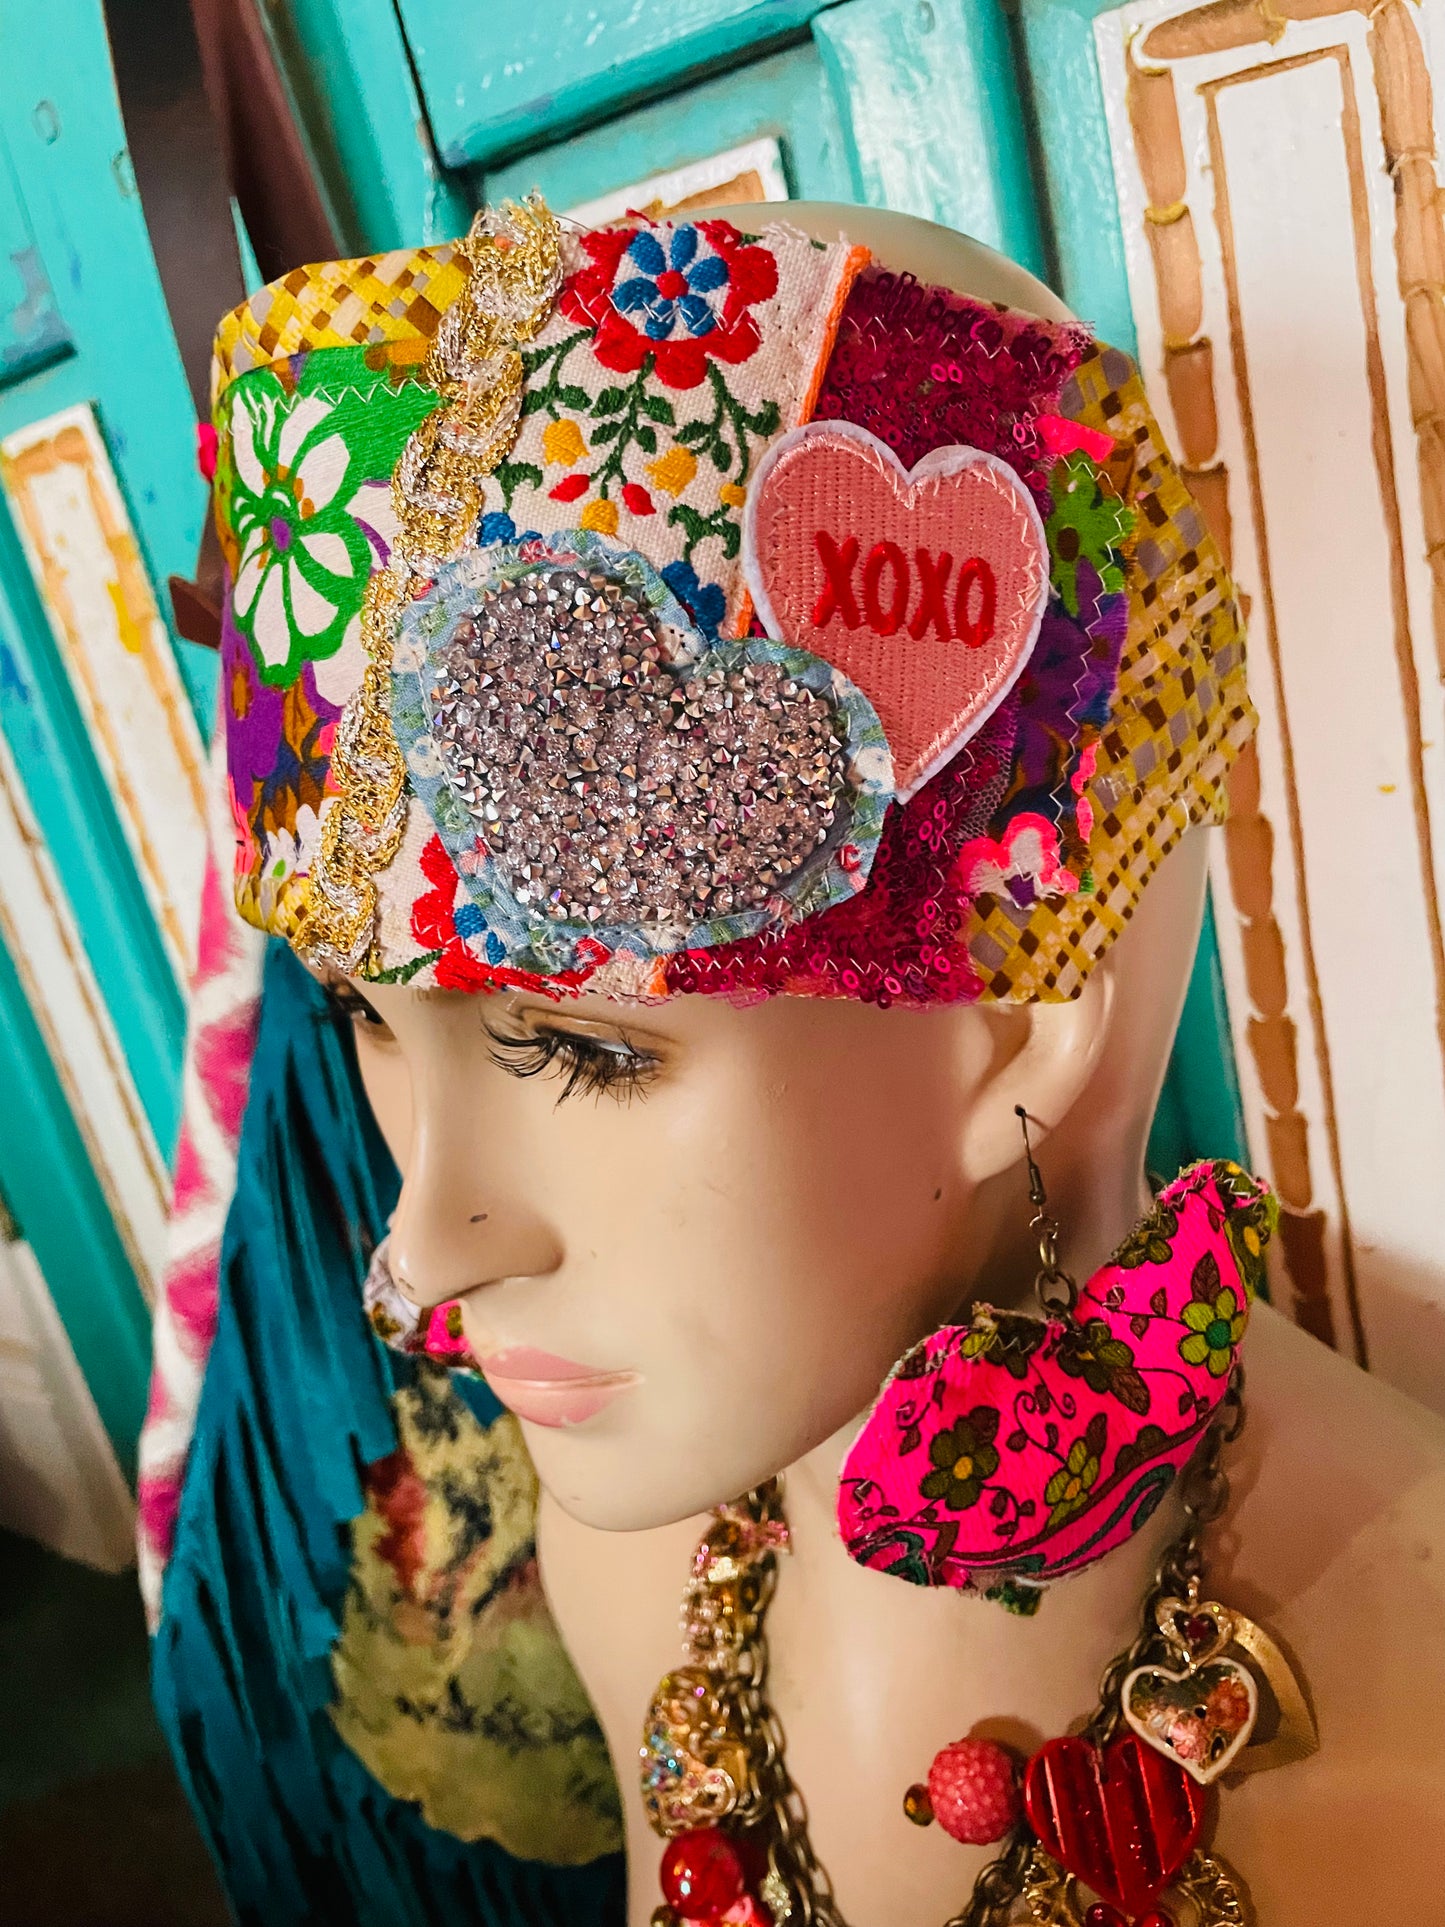 Xoxo vintage headband